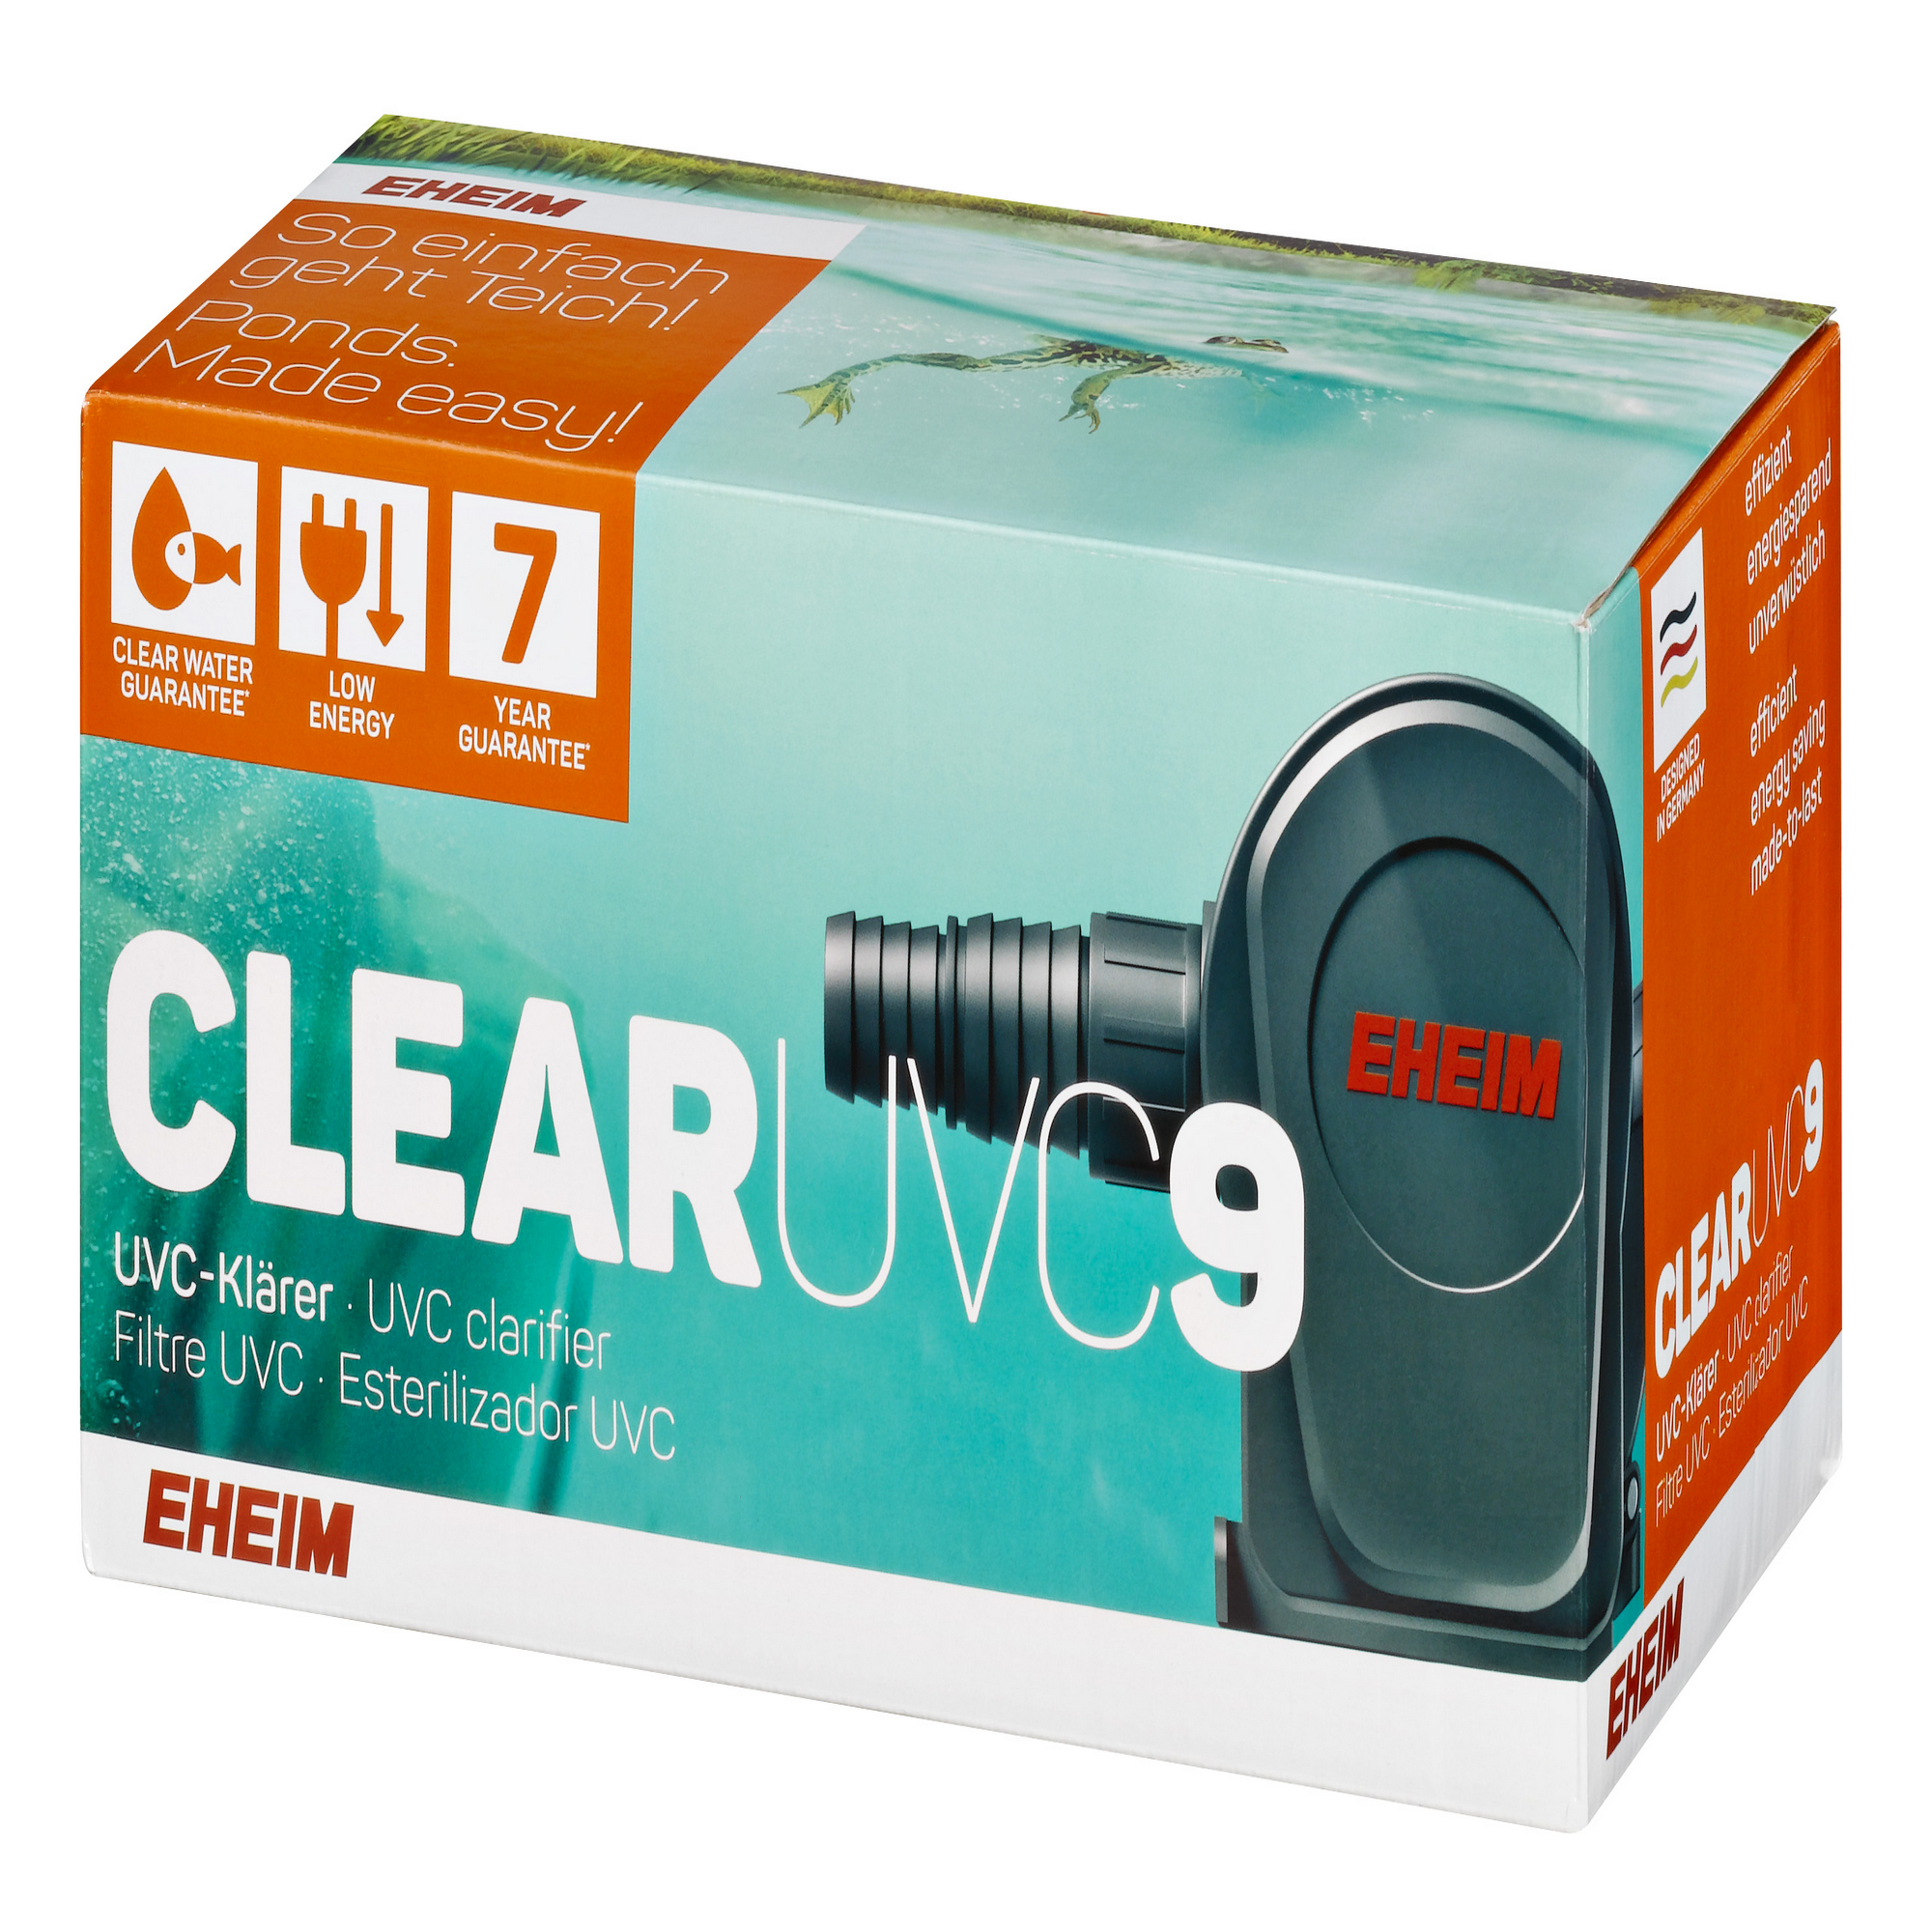 EHEIM CLEAR UVC 9 UVC-Klärer + product picture